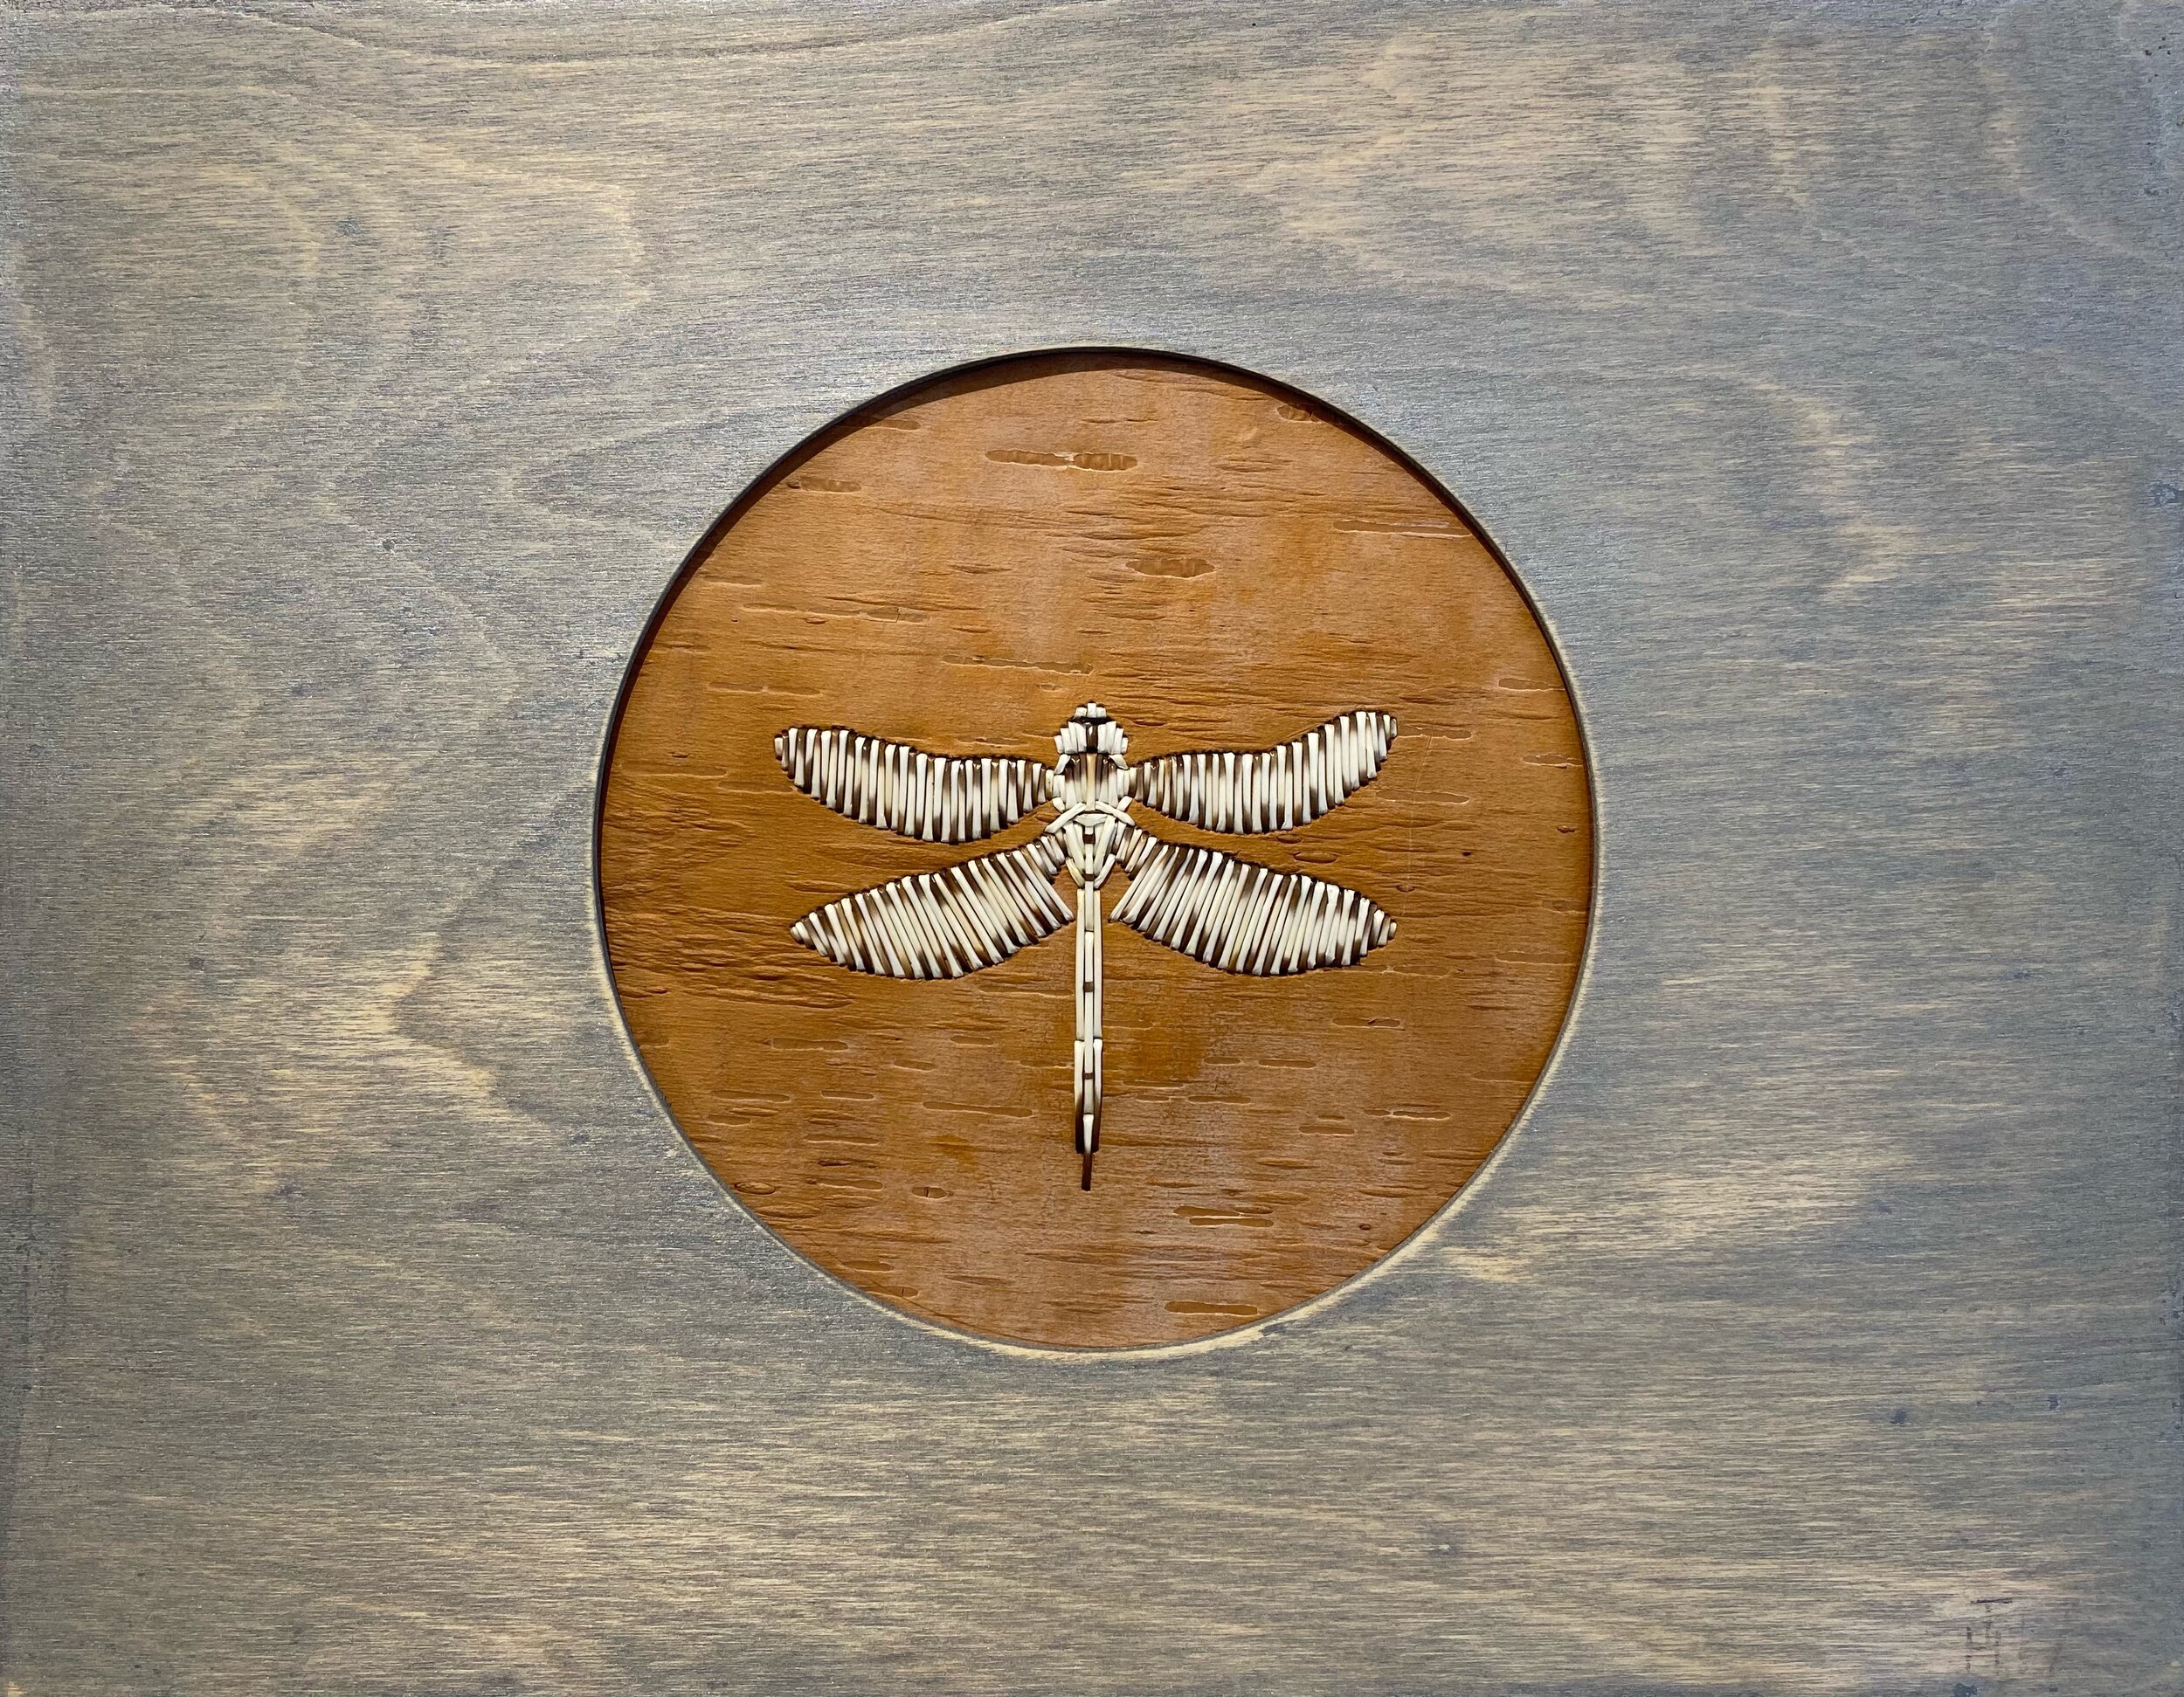 $1200.00, Apuciqaha (Dragonfly) - Porcupine Quills, Birch Bark, wood panel, 11” x 14